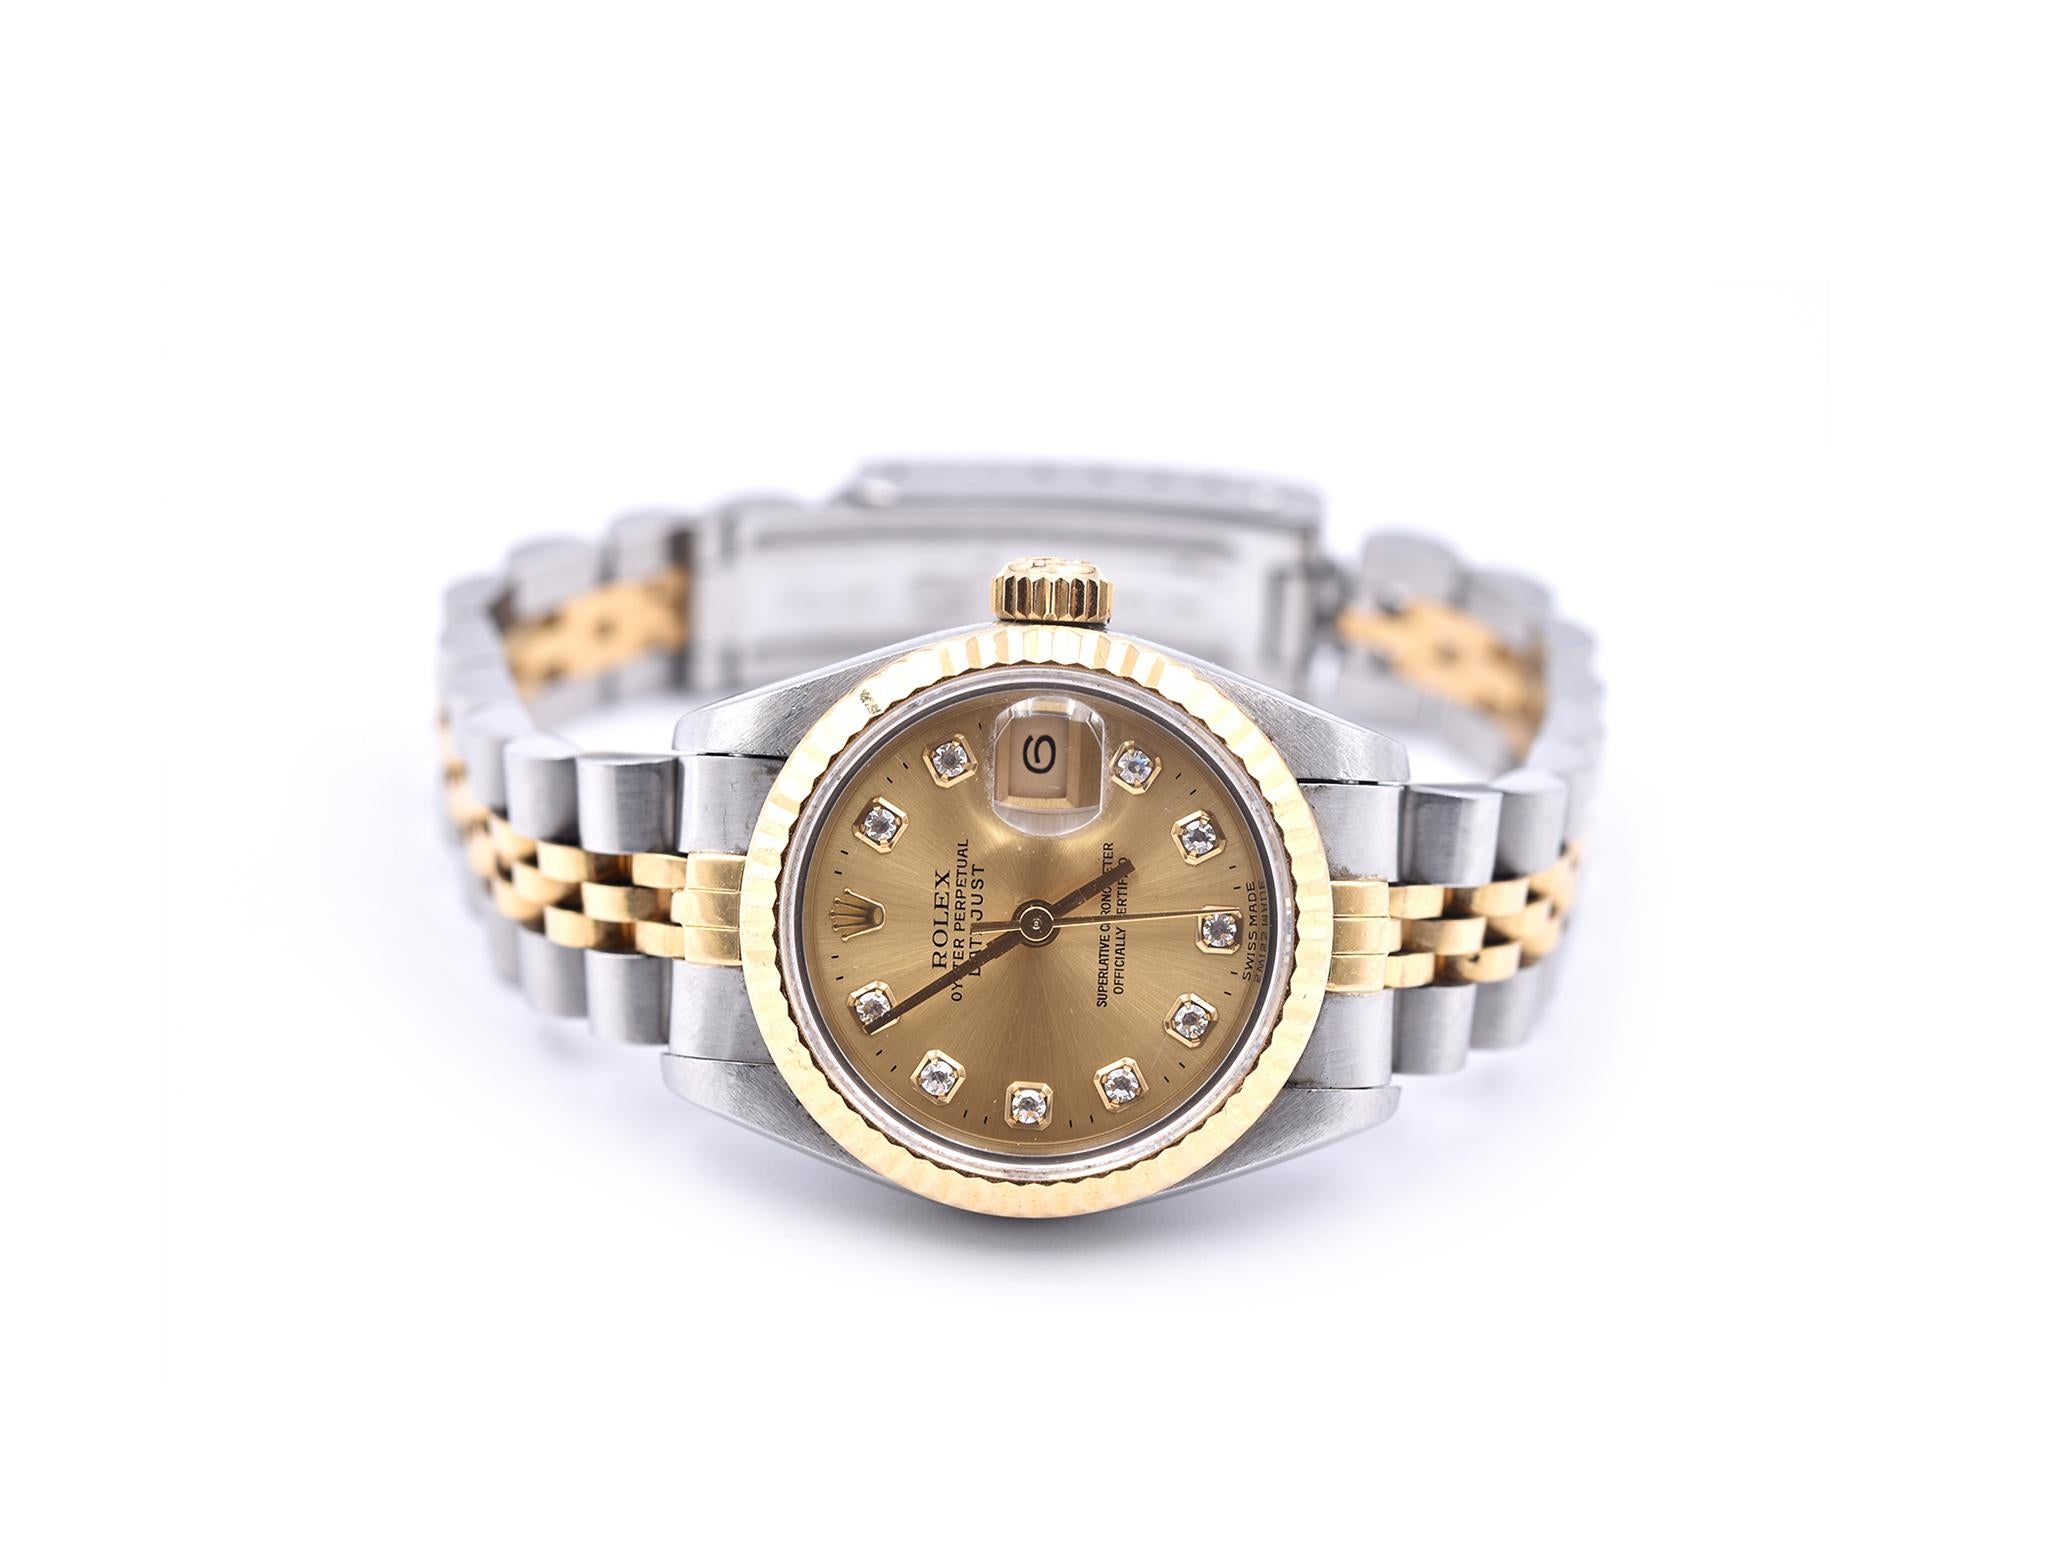 Rolex Stainless Steel/18 Karat Gold Datejust with Diamond Dial Watch Ref. 6917 In Excellent Condition In Scottsdale, AZ